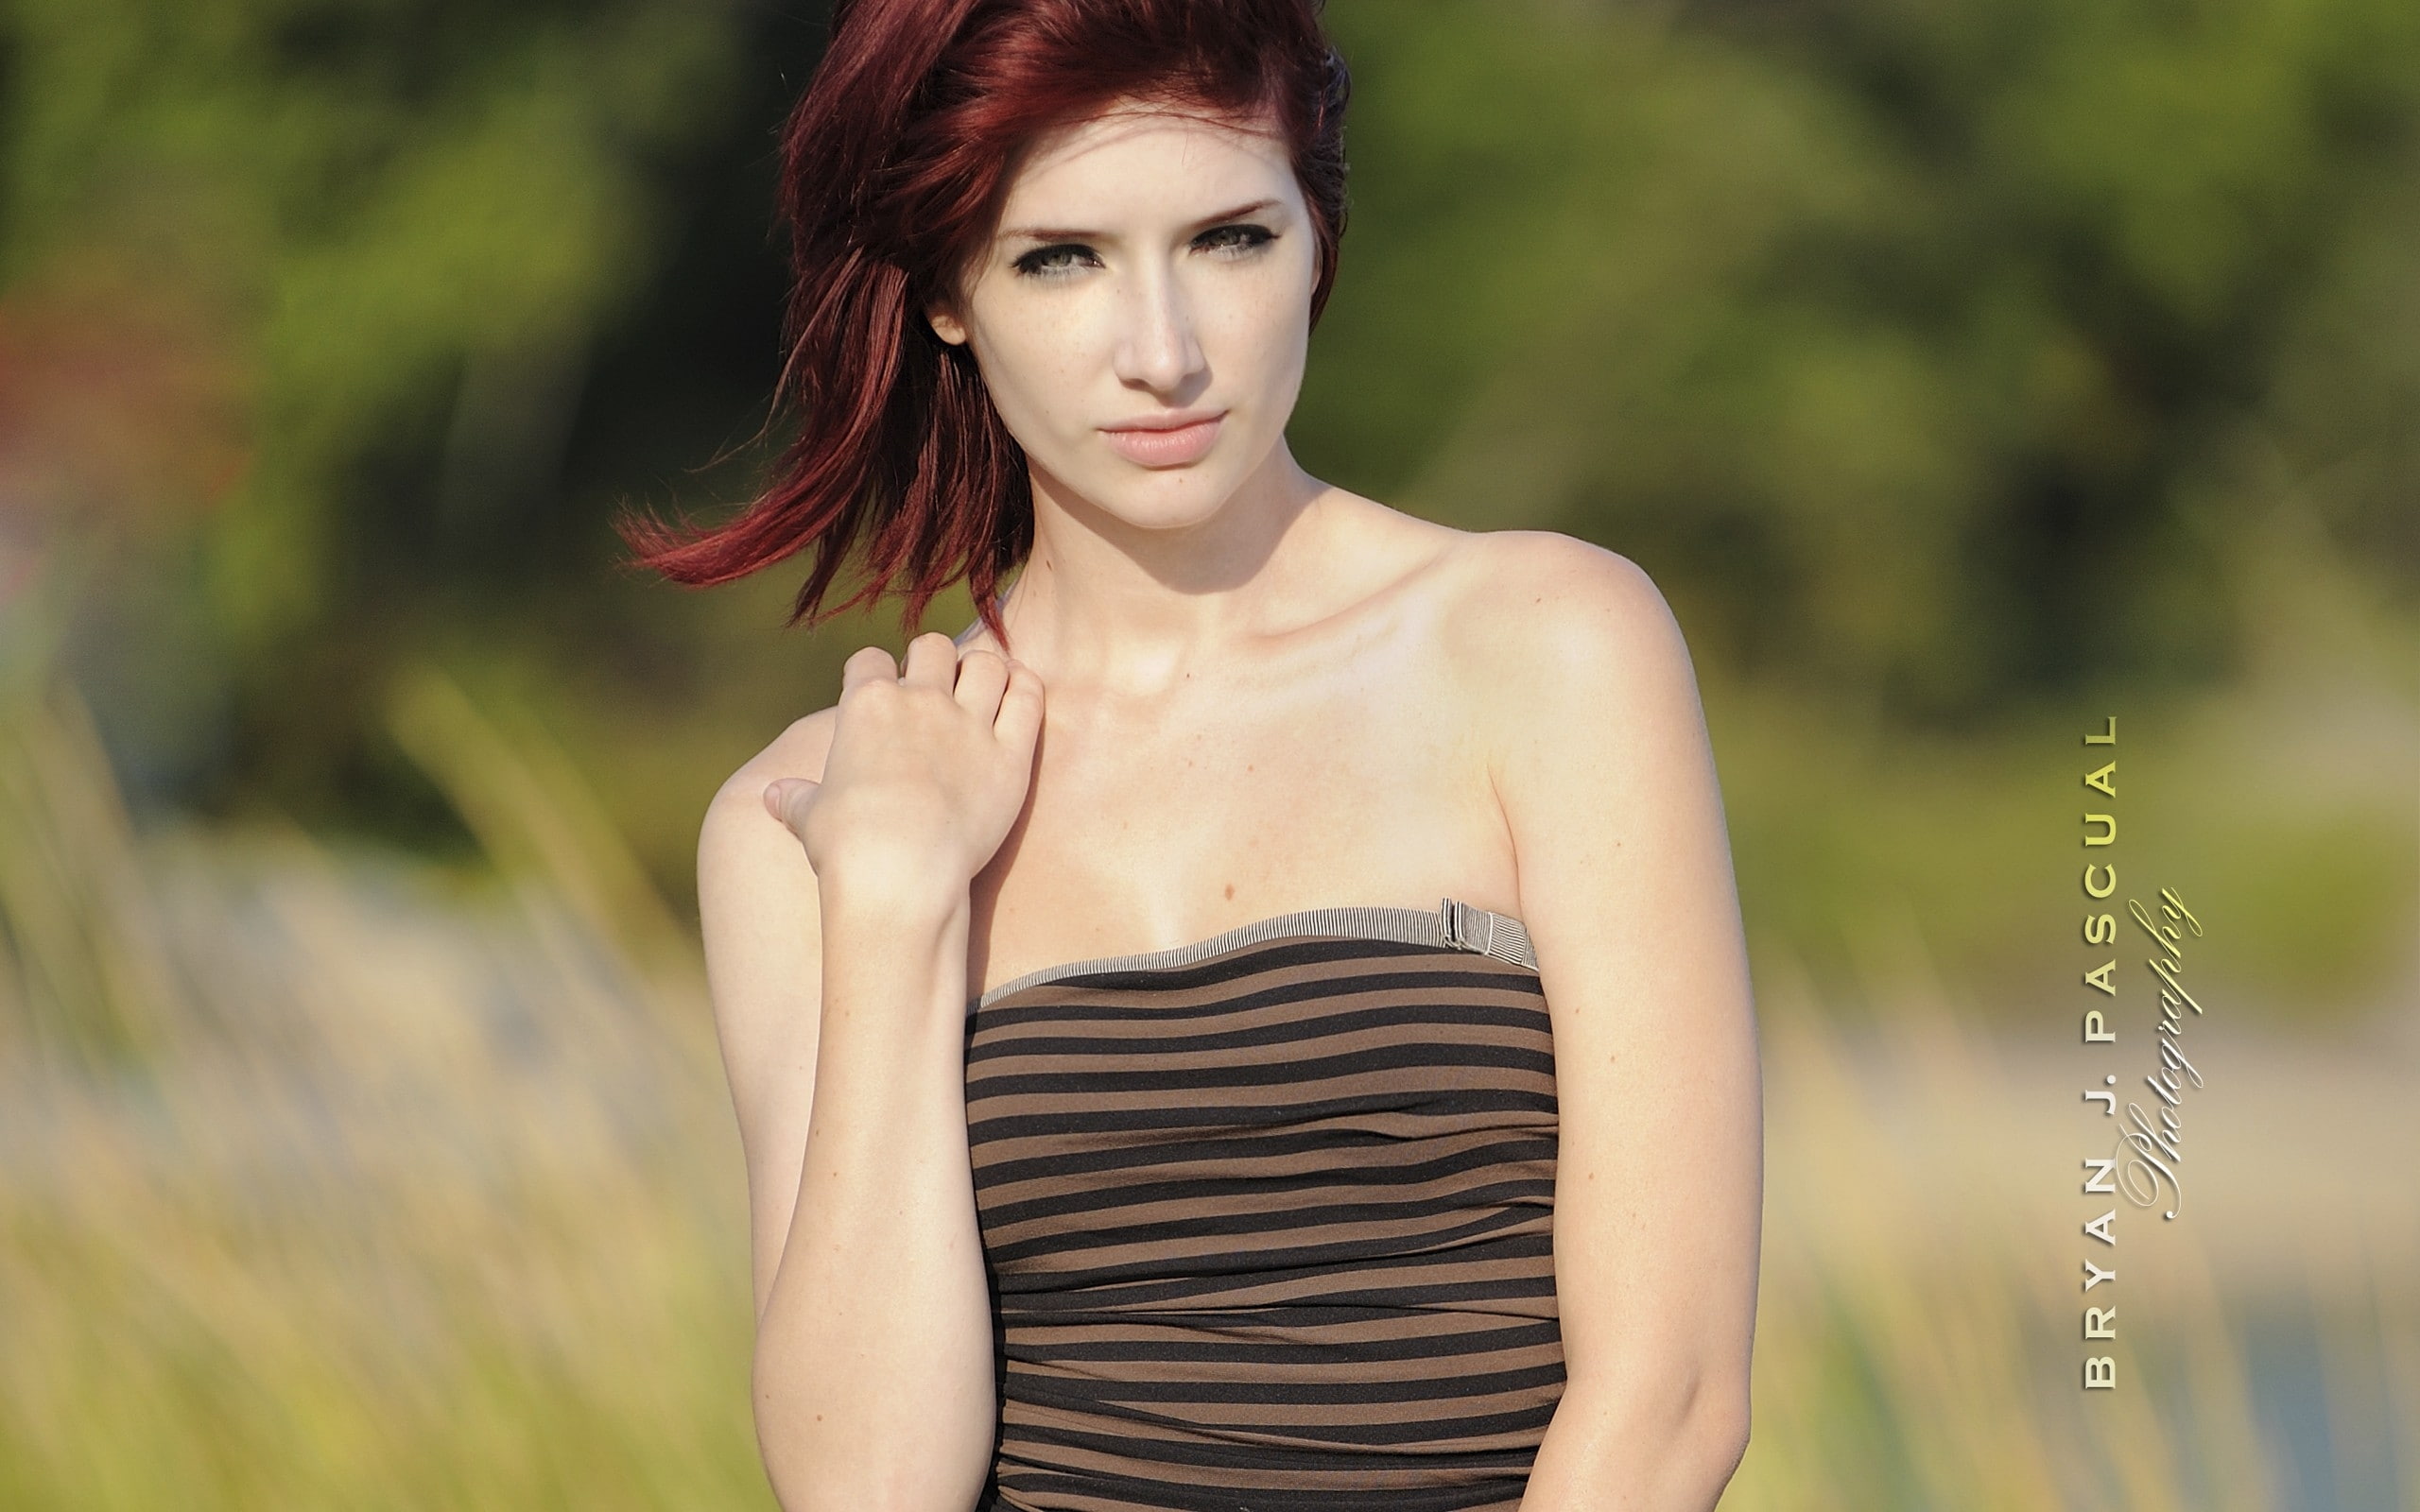 Free Download Hd Wallpaper Women Susan Coffey Redheads Models Outdoors People Redheads Hd Art